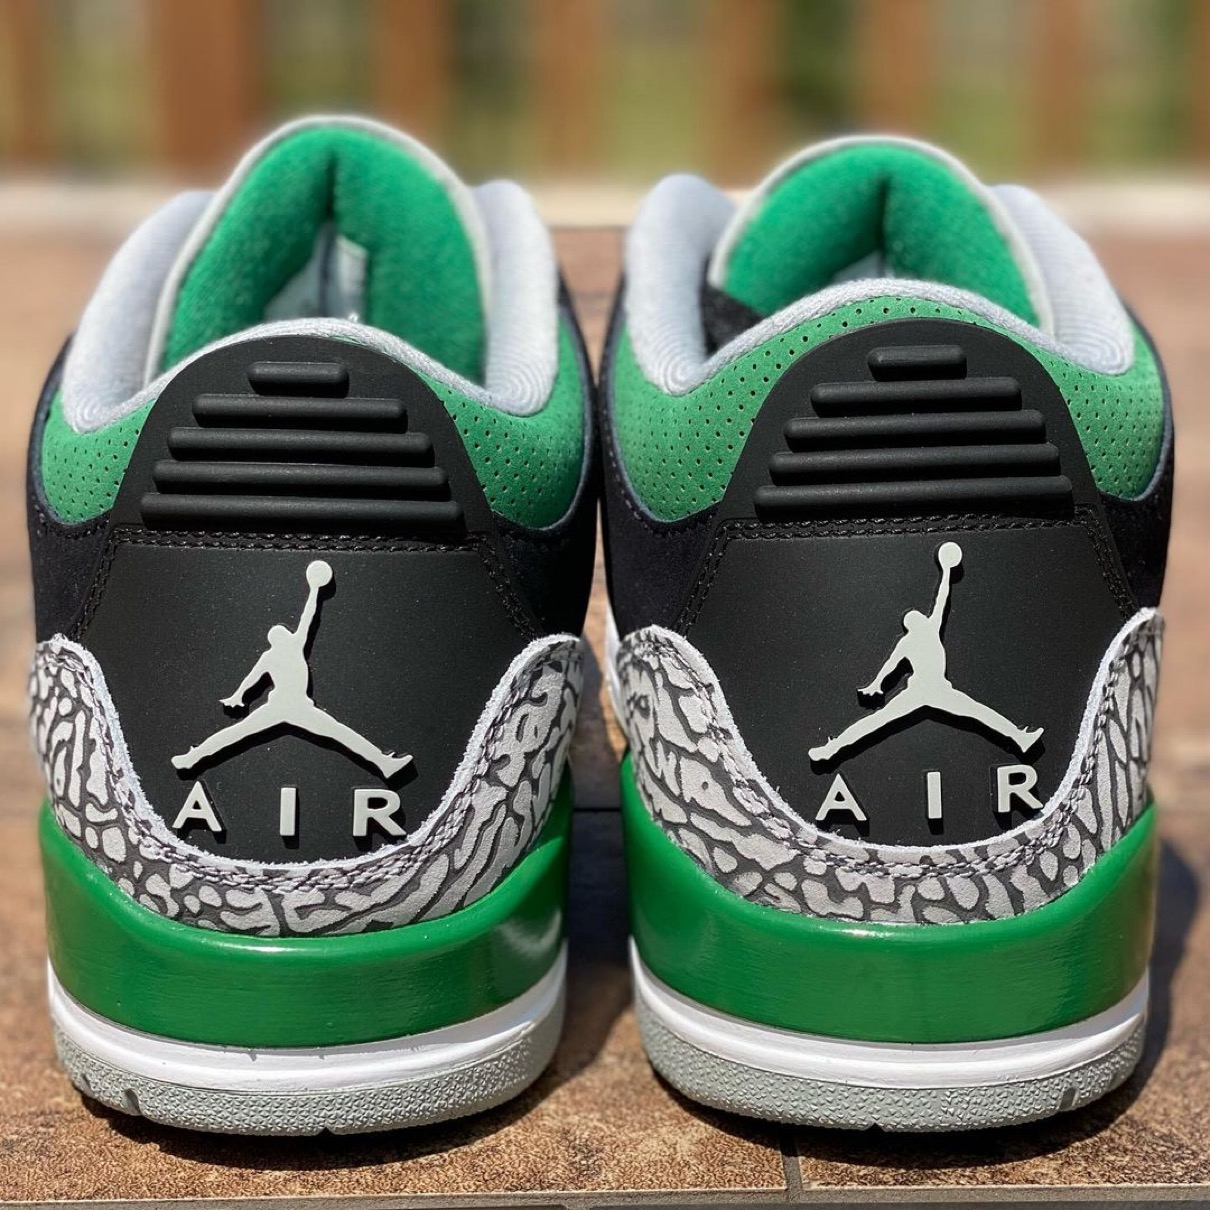 Nike】Air Jordan 3 Retro “Pine Green”が国内11月13日に発売予定 | UP